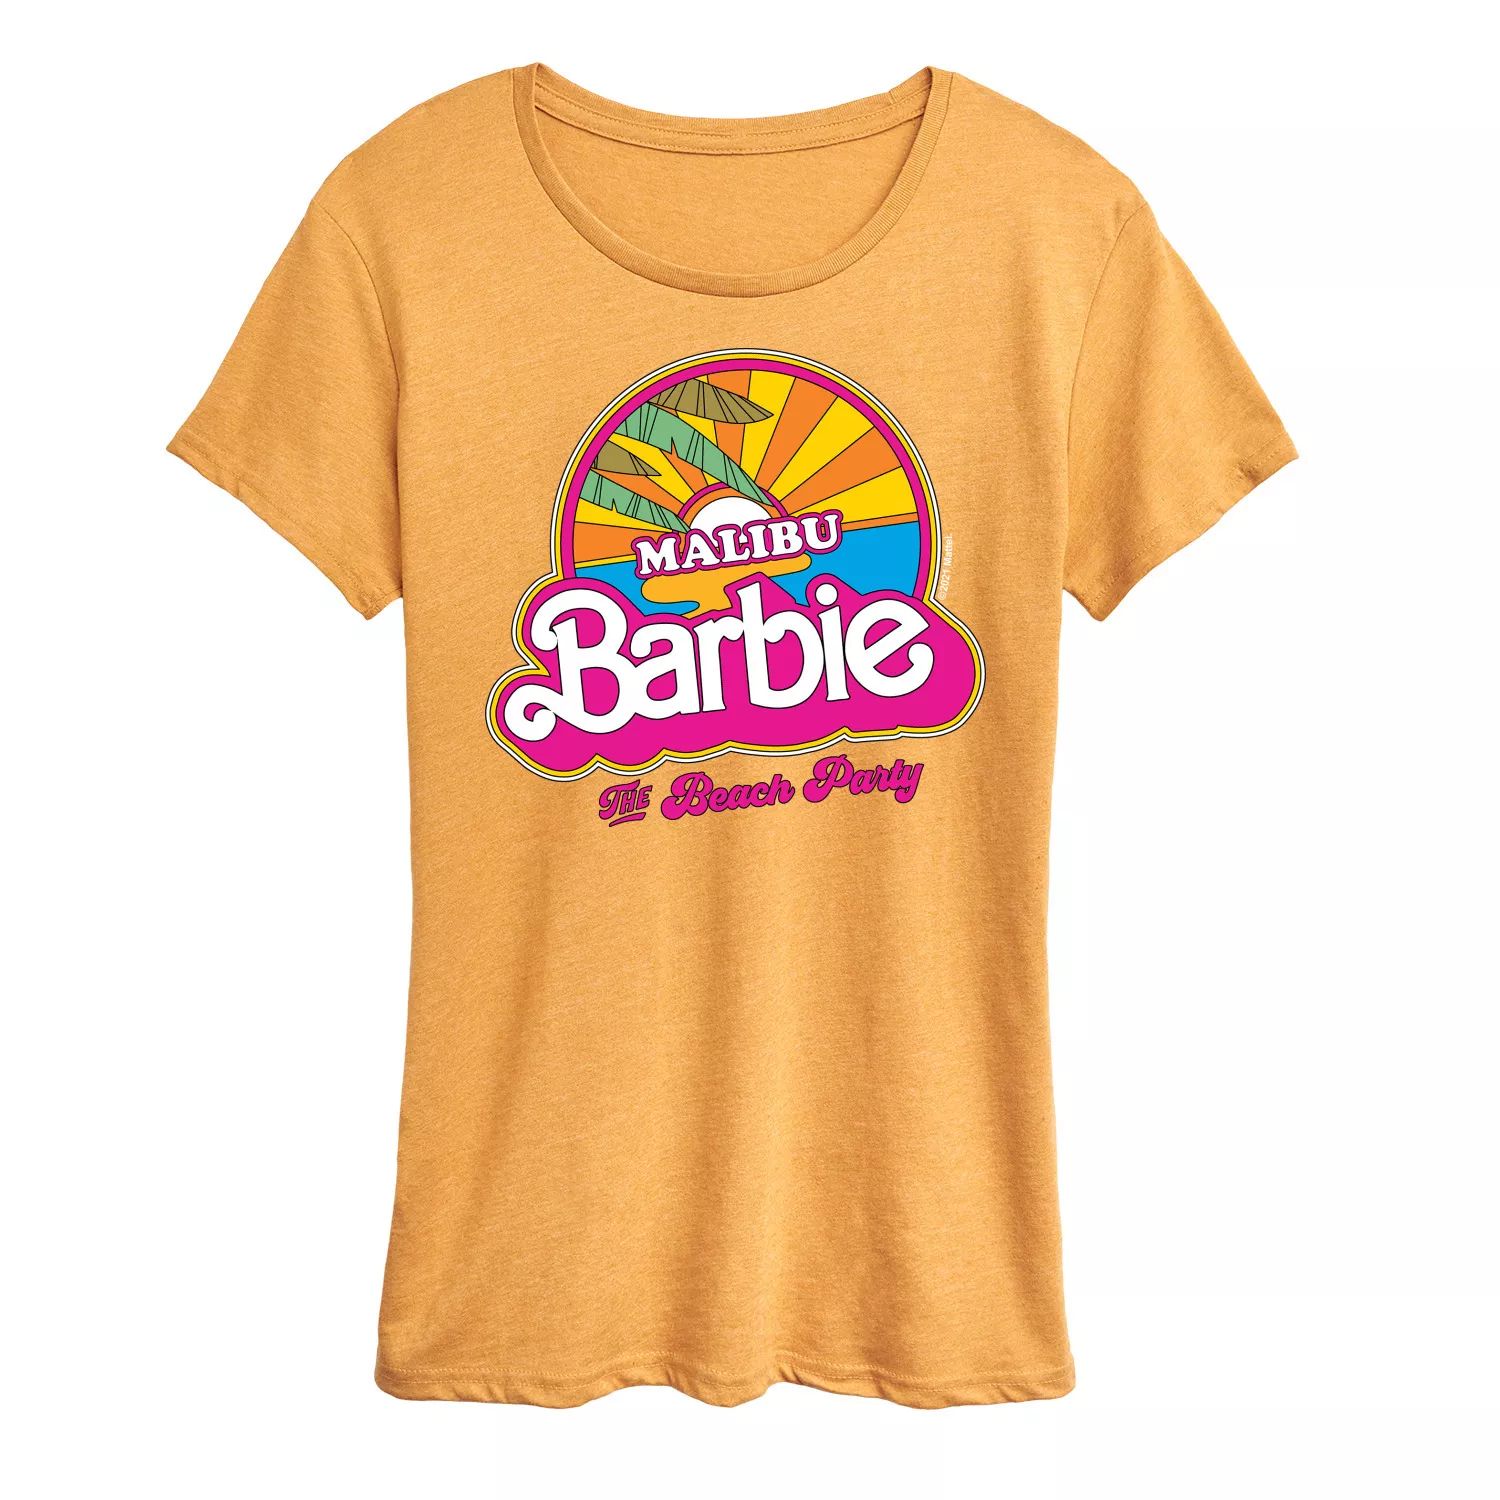 Футболка с рисунком Барби Малибу для юниоров Licensed Character футболка с рисунком барби малибу для юниоров licensed character